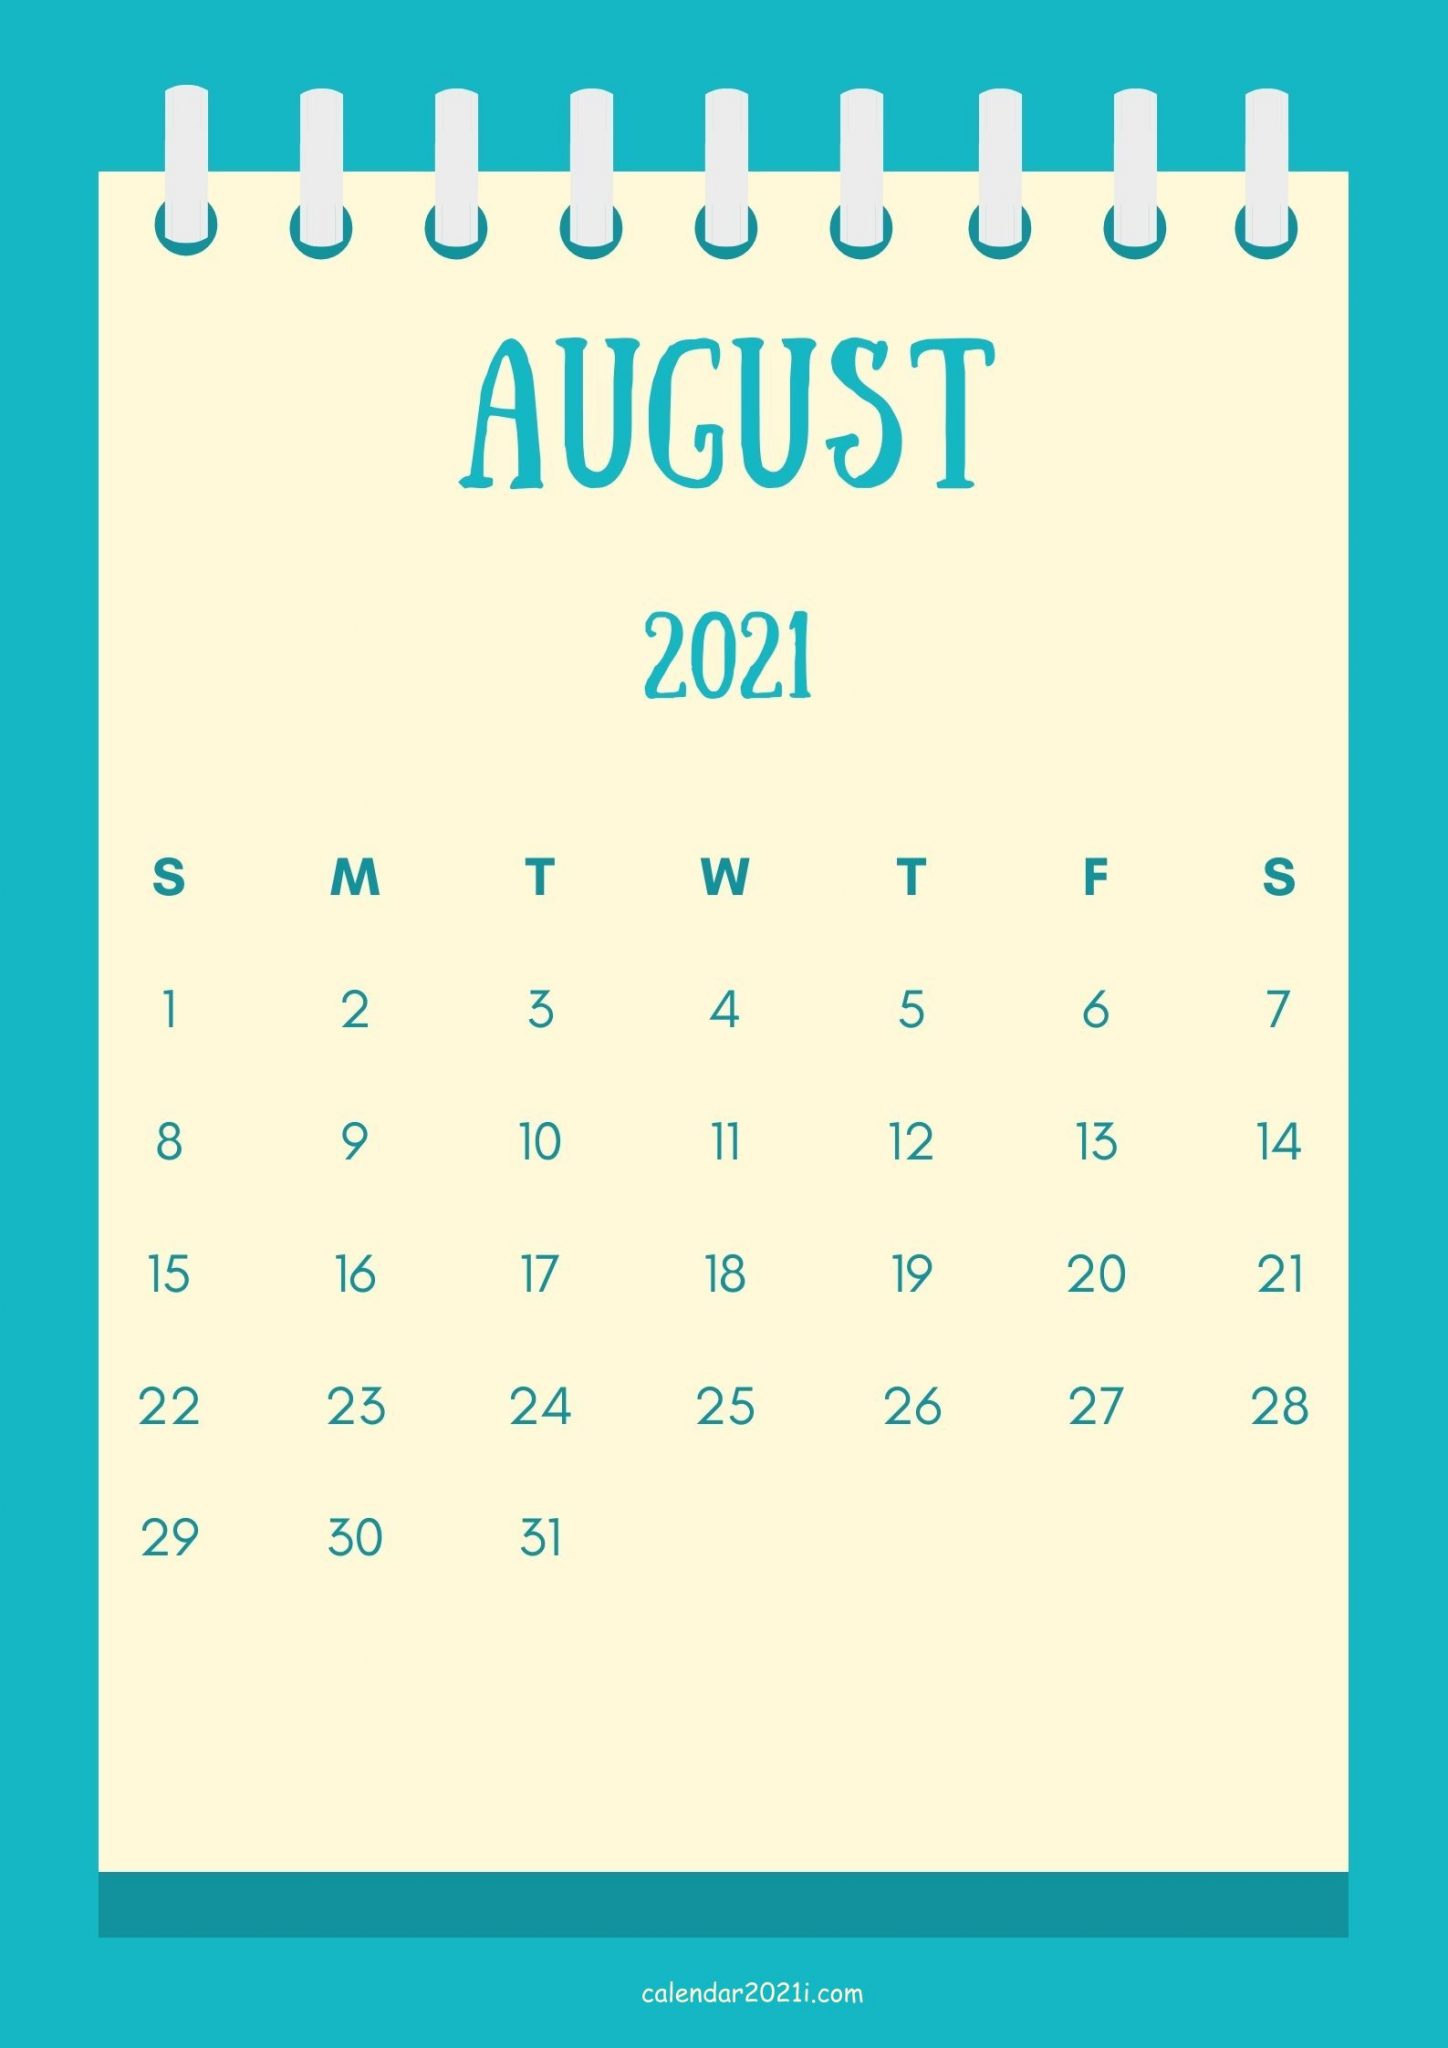 August 2021 Cute Calendar Design